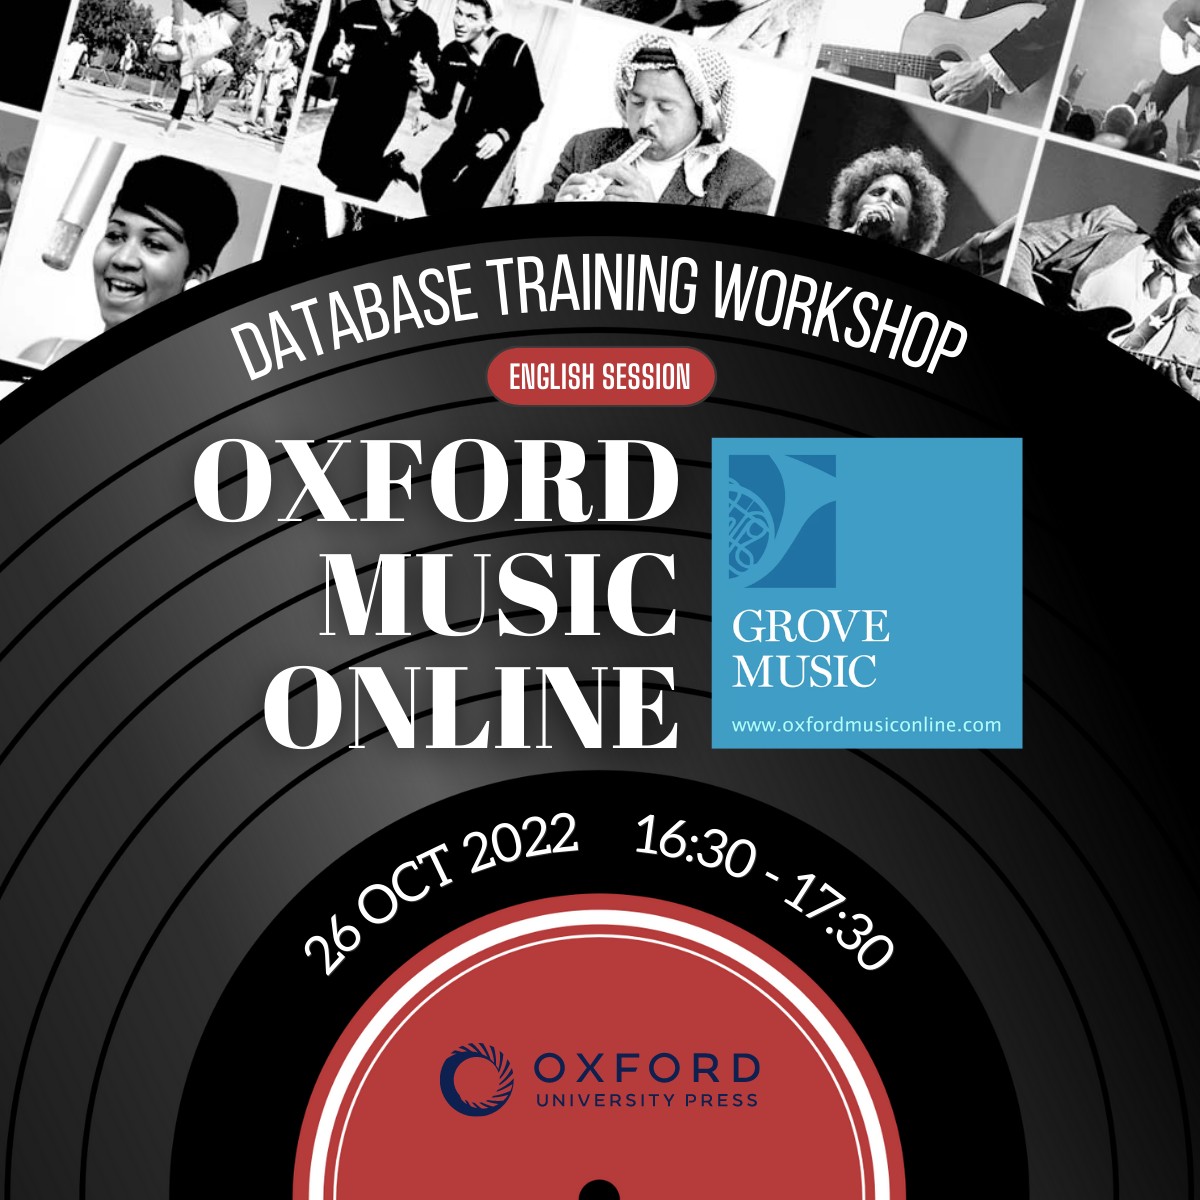 Oxford Music Online Training Workshop (English Session)